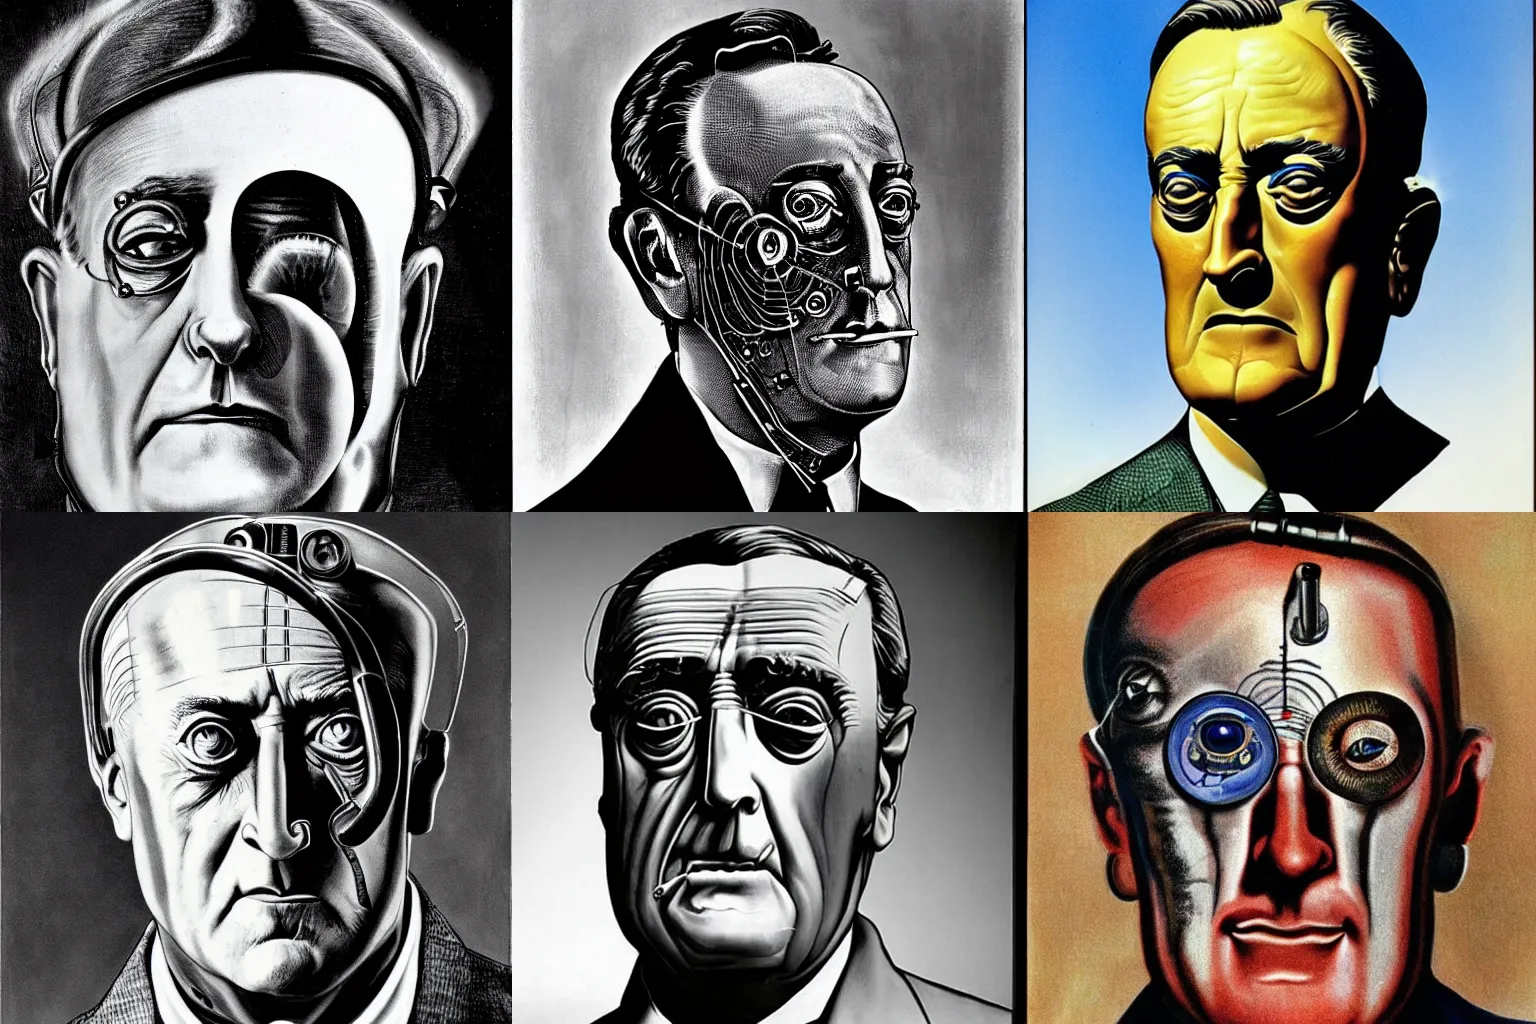 Prompt: Cyborg Franklin Delano Roosevelt with a half robotic face, portrait by Salvador Dali